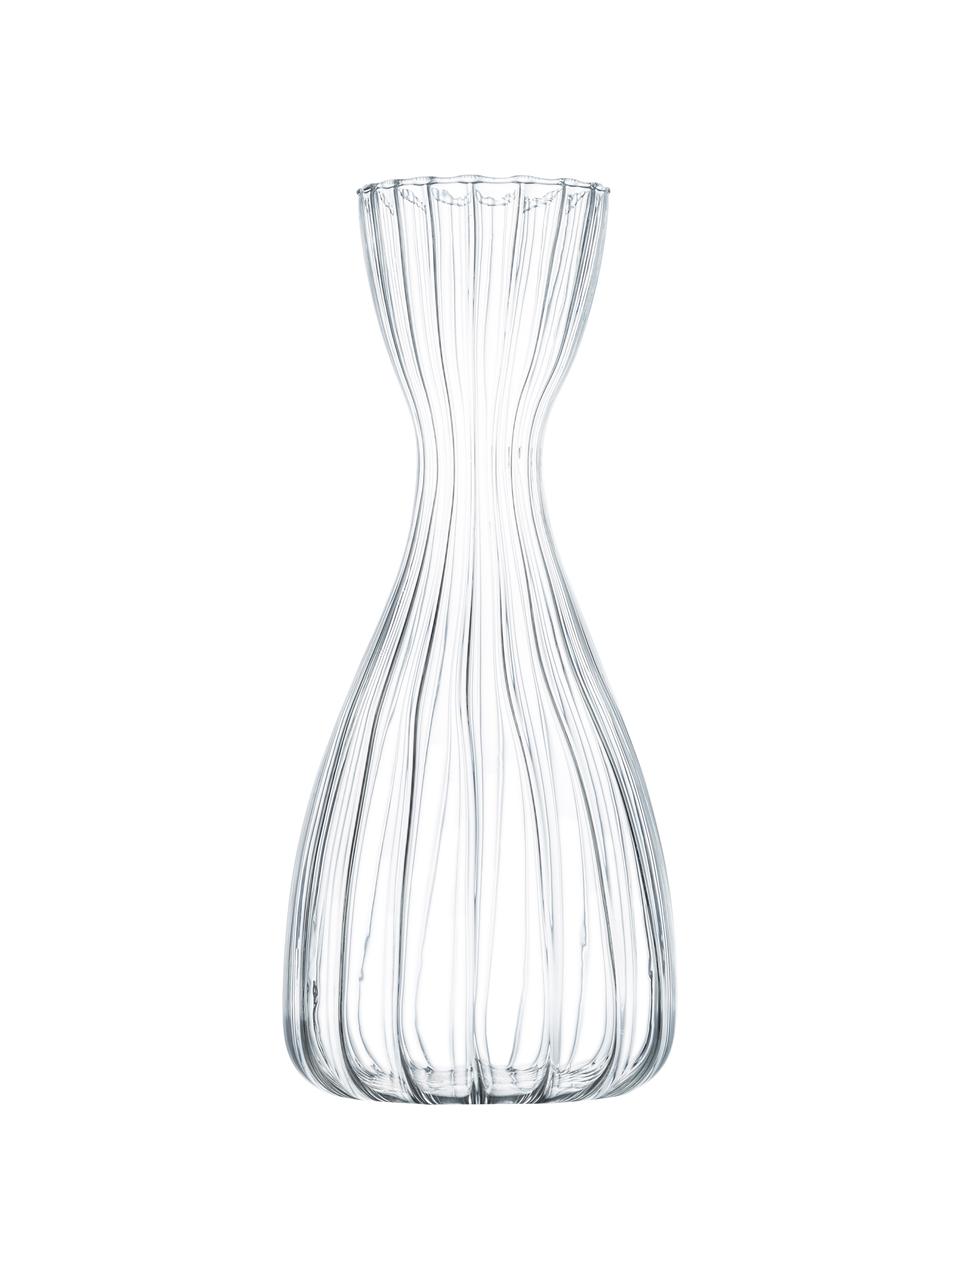 Karaffe Romantic aus Borosilikatglas und mit Rillenrelief, 1 L, Borosilikatglas, Transparent, Ø 8 x H 25 cm